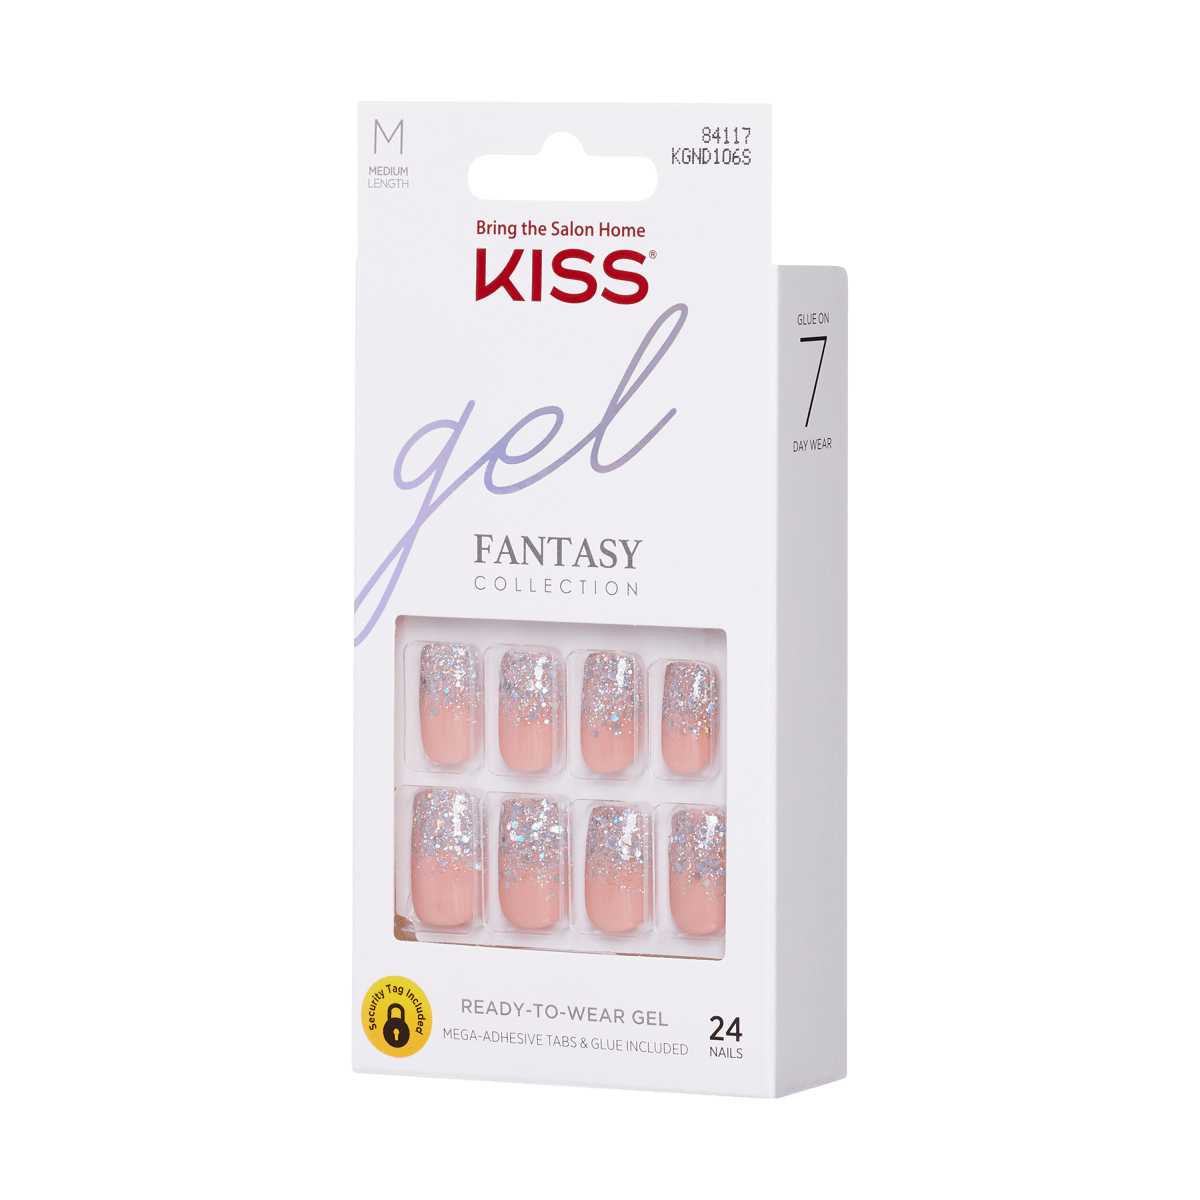 KISS Gel Fantasy Ready to Wear Gel Nails - Warning Sign